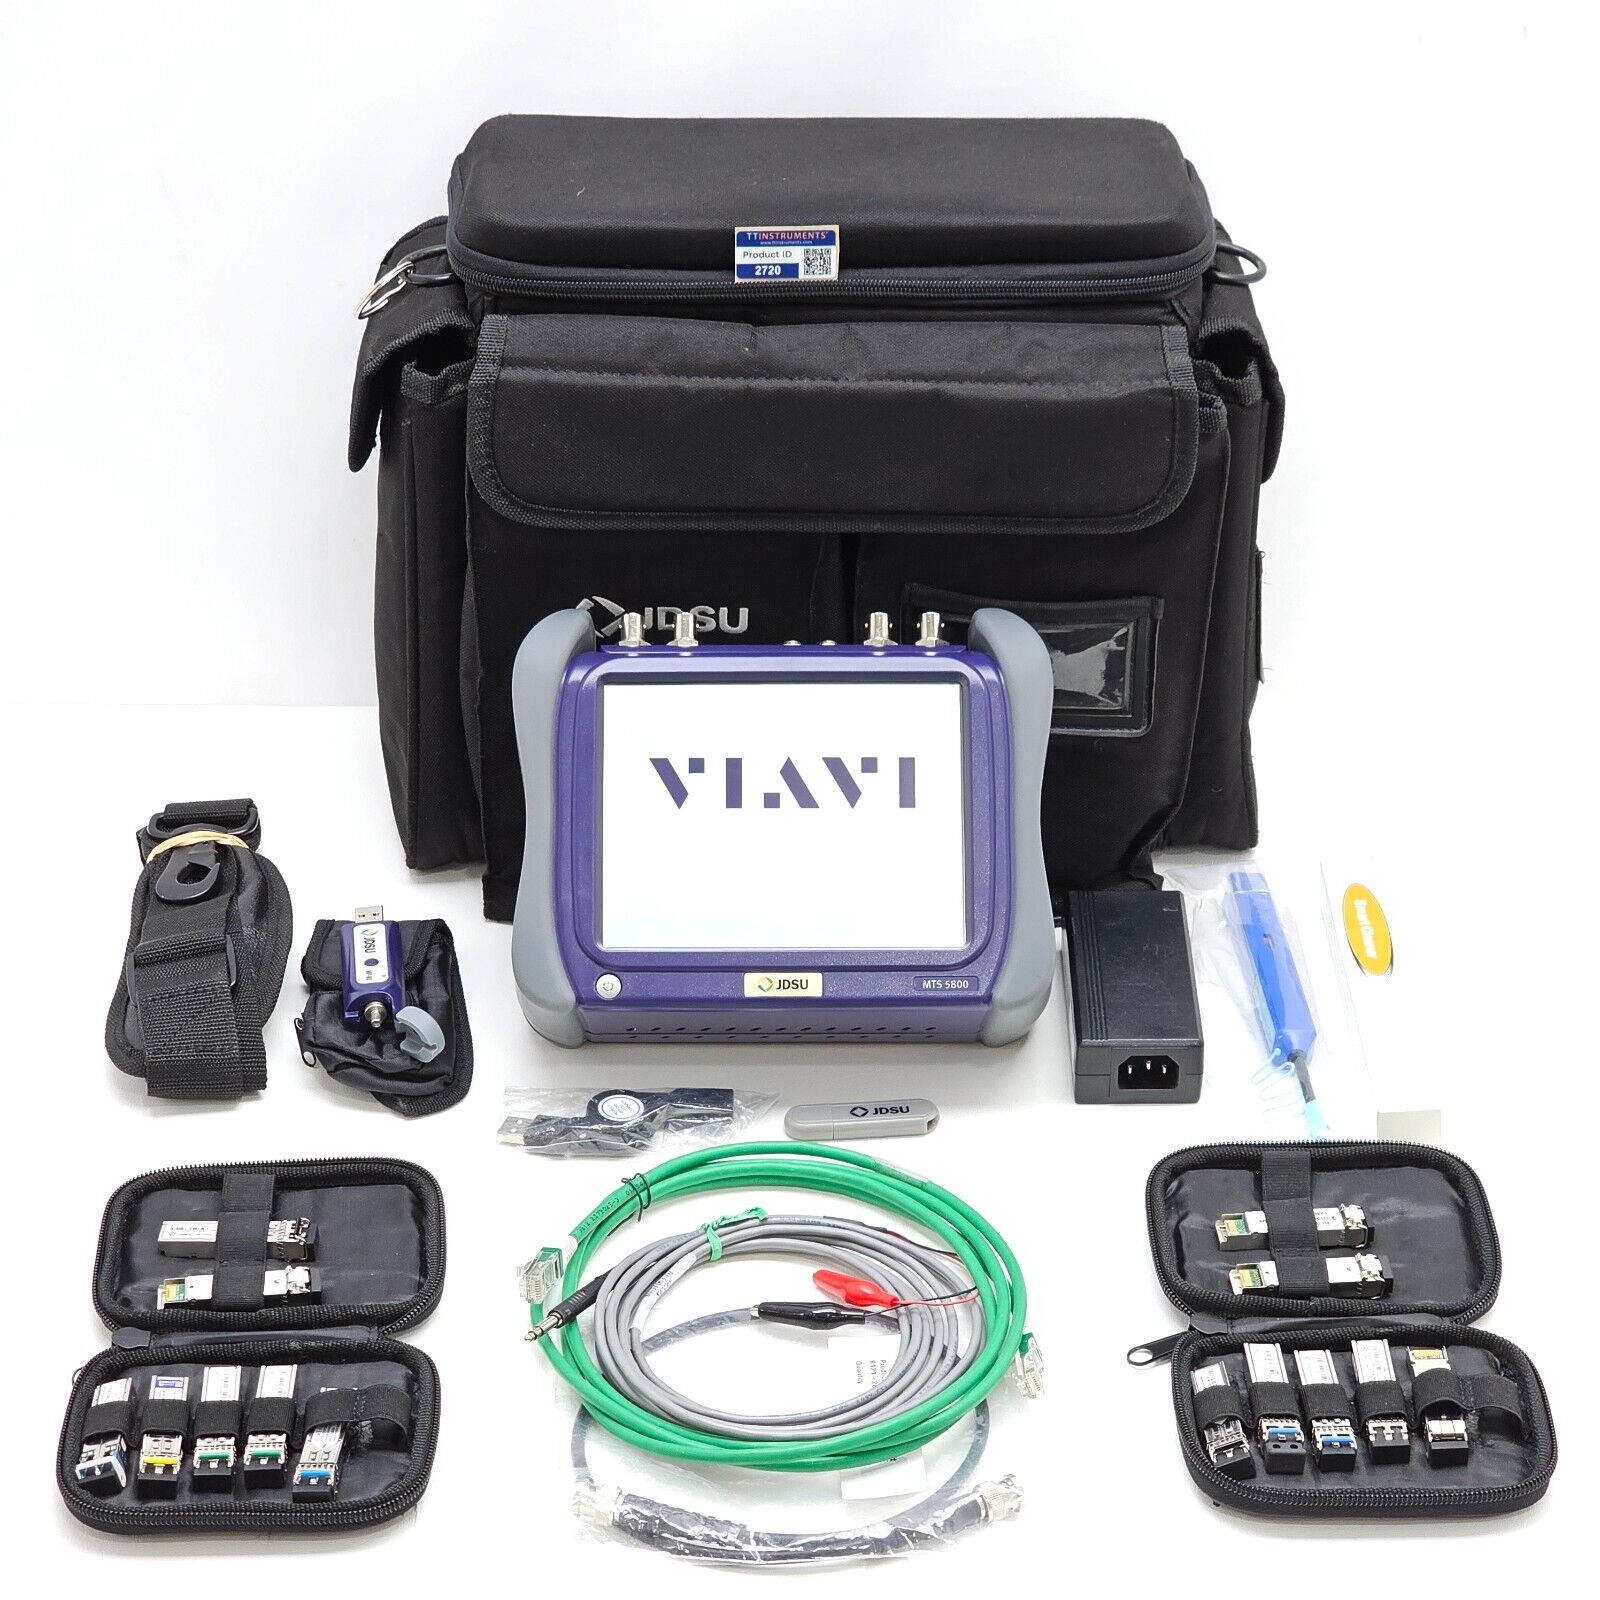 Calibrated Viavi JDSU MTS 5800 w/ 5801P Network Tester LOADED with MANY Options